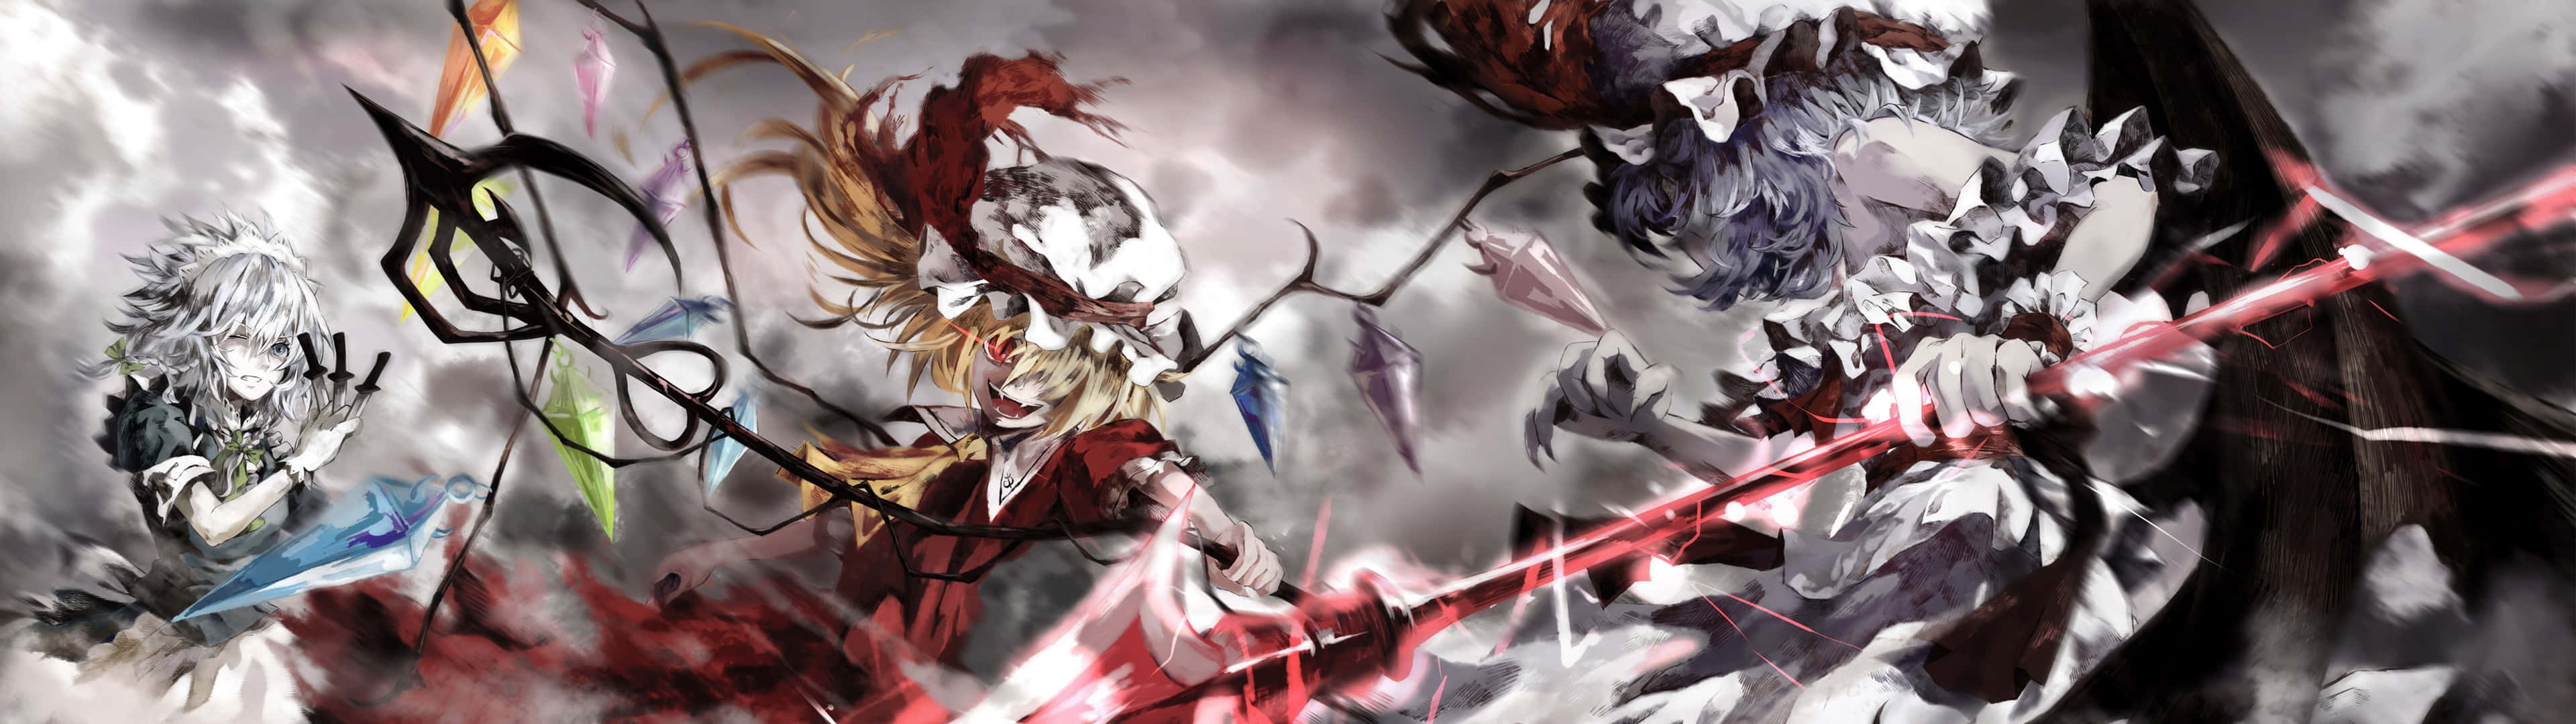 3840 X 1080 Demon Lords Fight Anime Hd Wallpaper